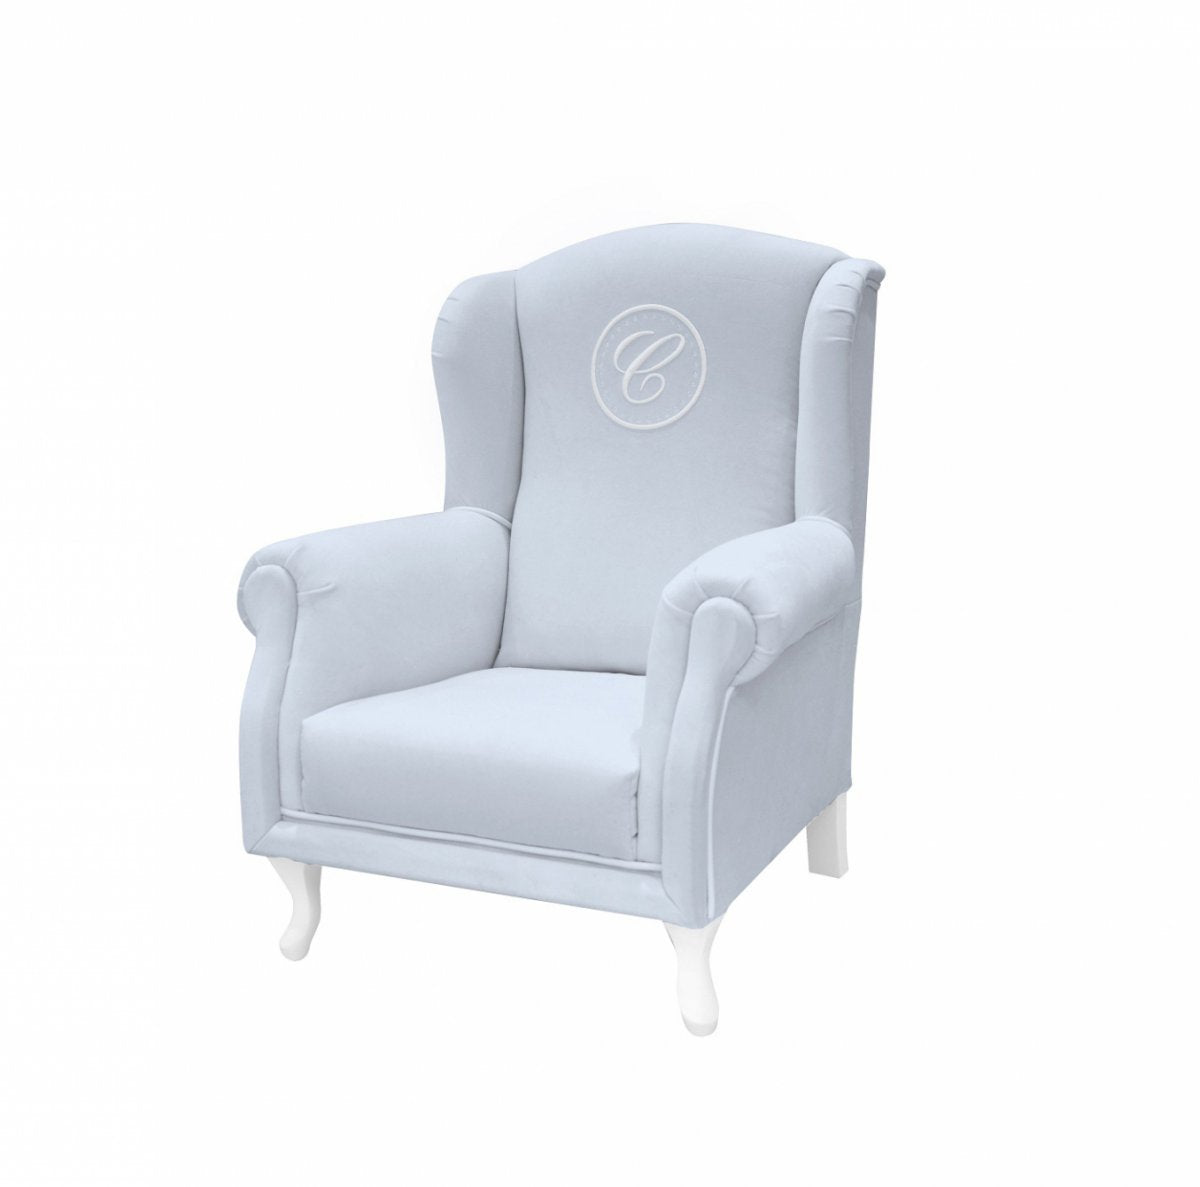 Blue Mini Armchair with Emblem